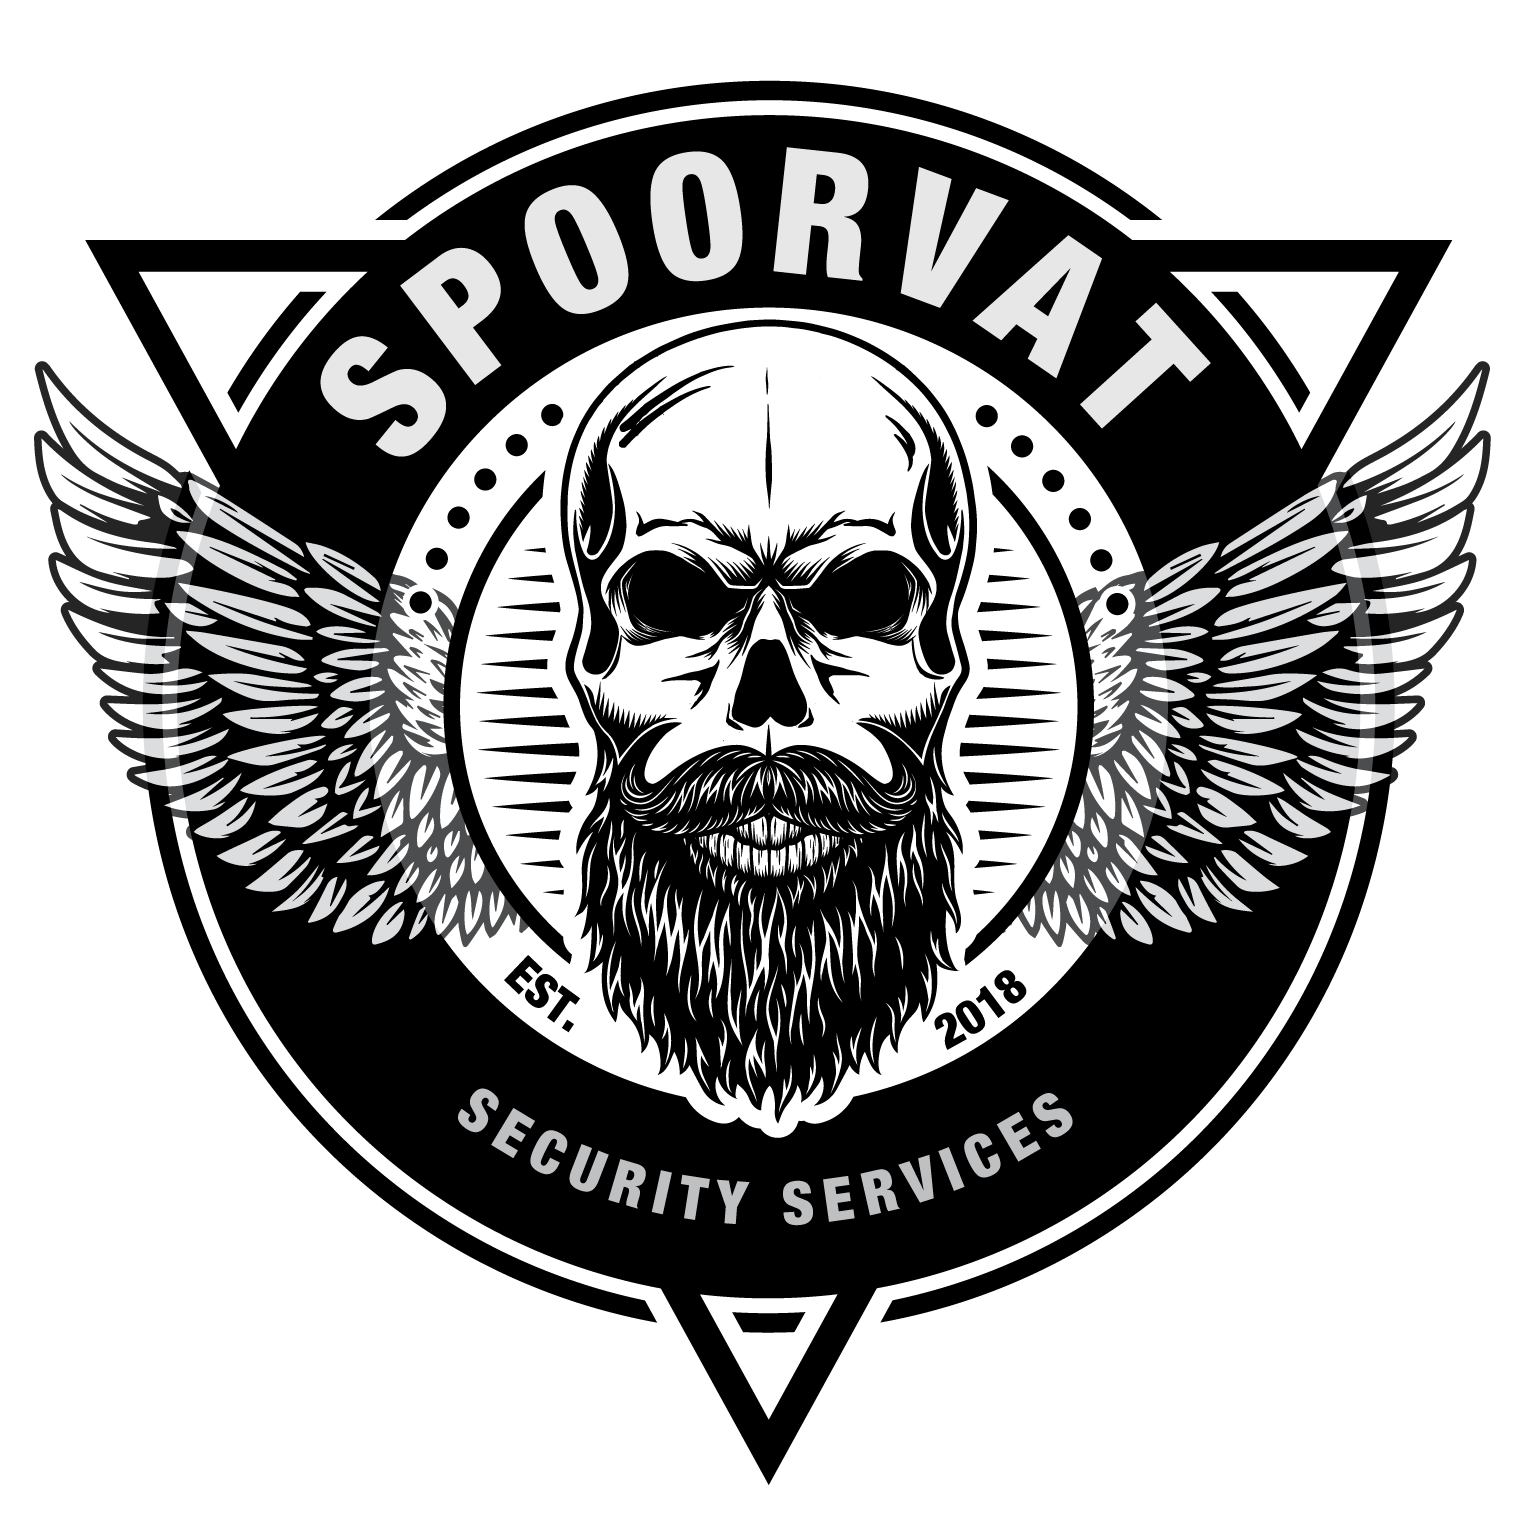 Spoorvat Security Services